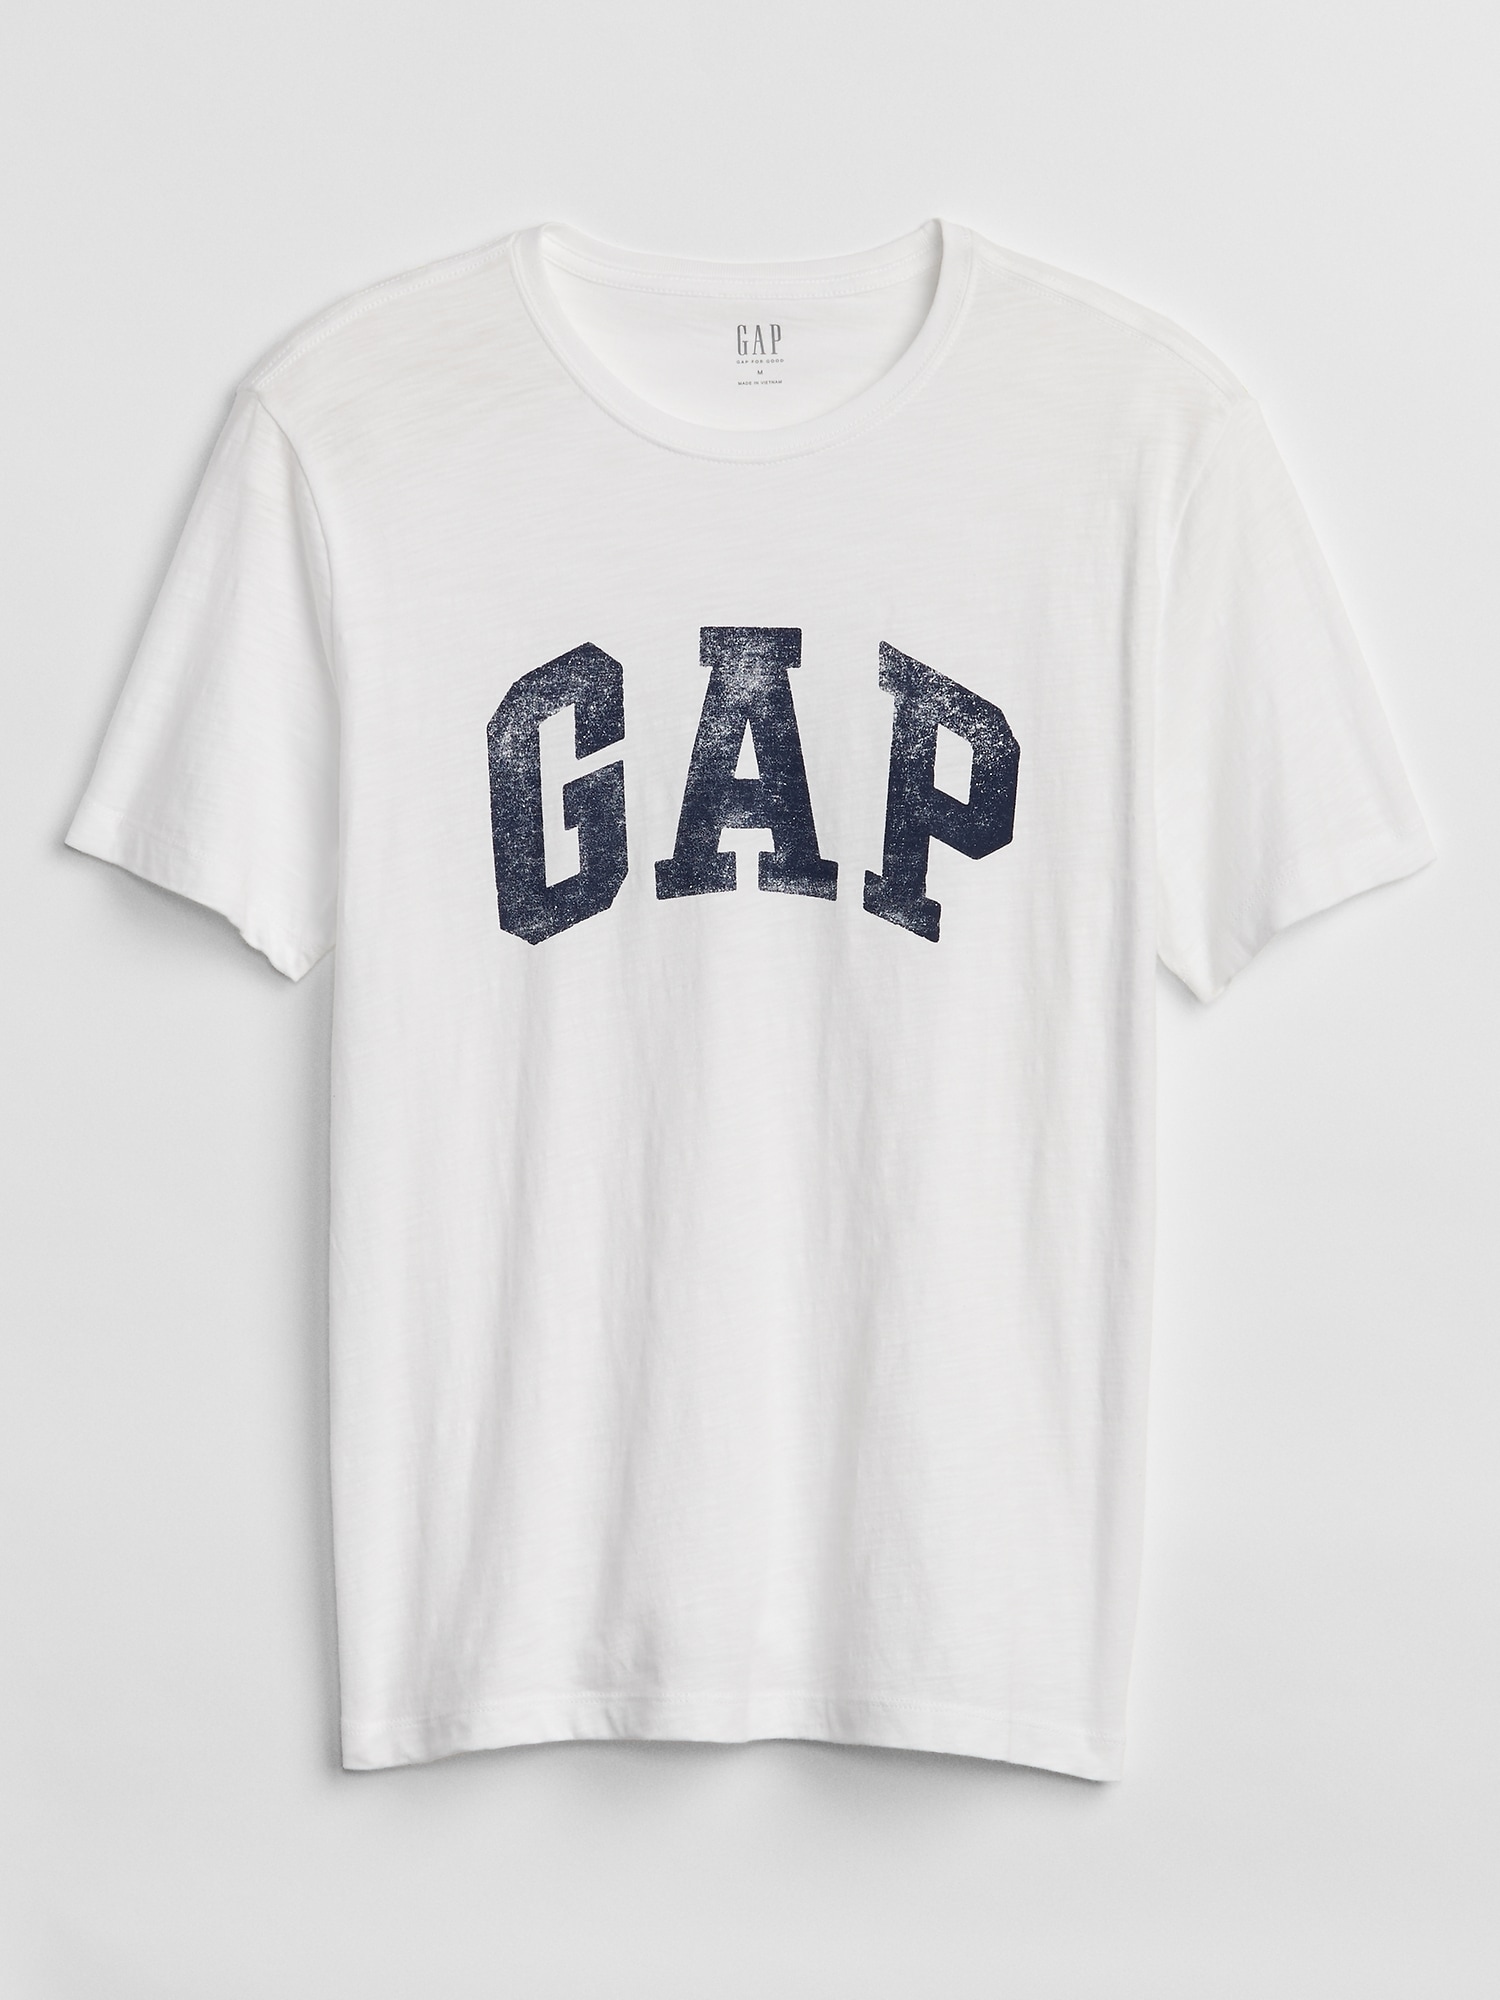 Gap Logo T-Shirt In Slub | Gap Factory